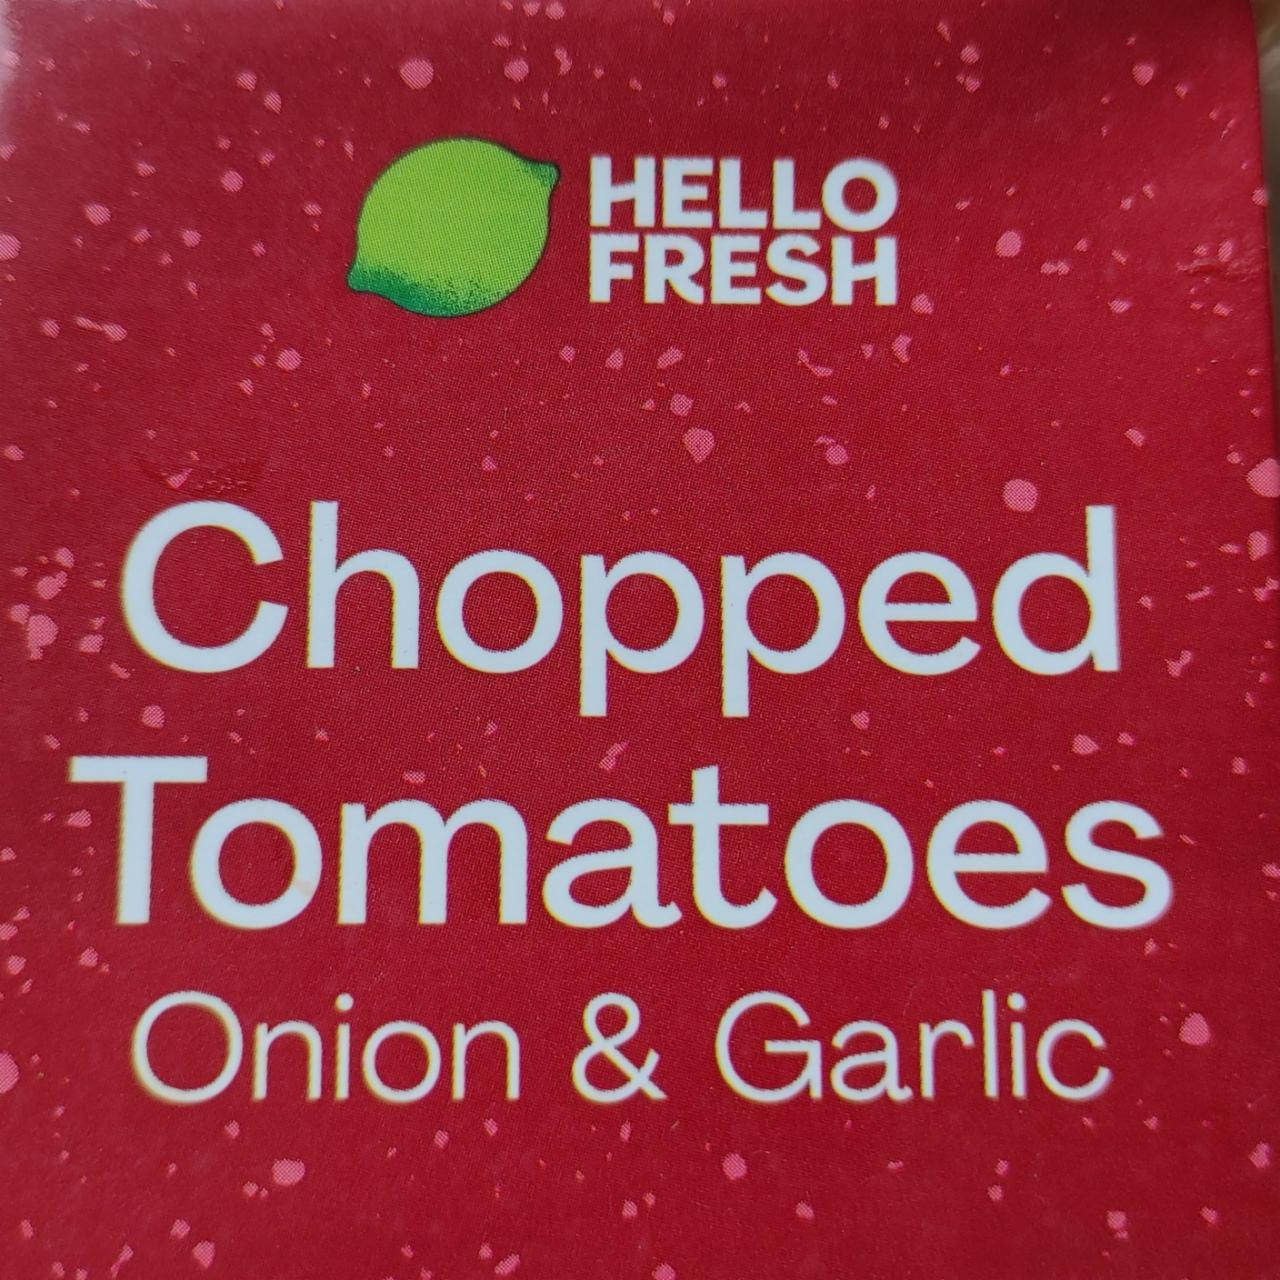 Fotografie - Chopped Tomatoes Onion & Garlic Hello Fresh